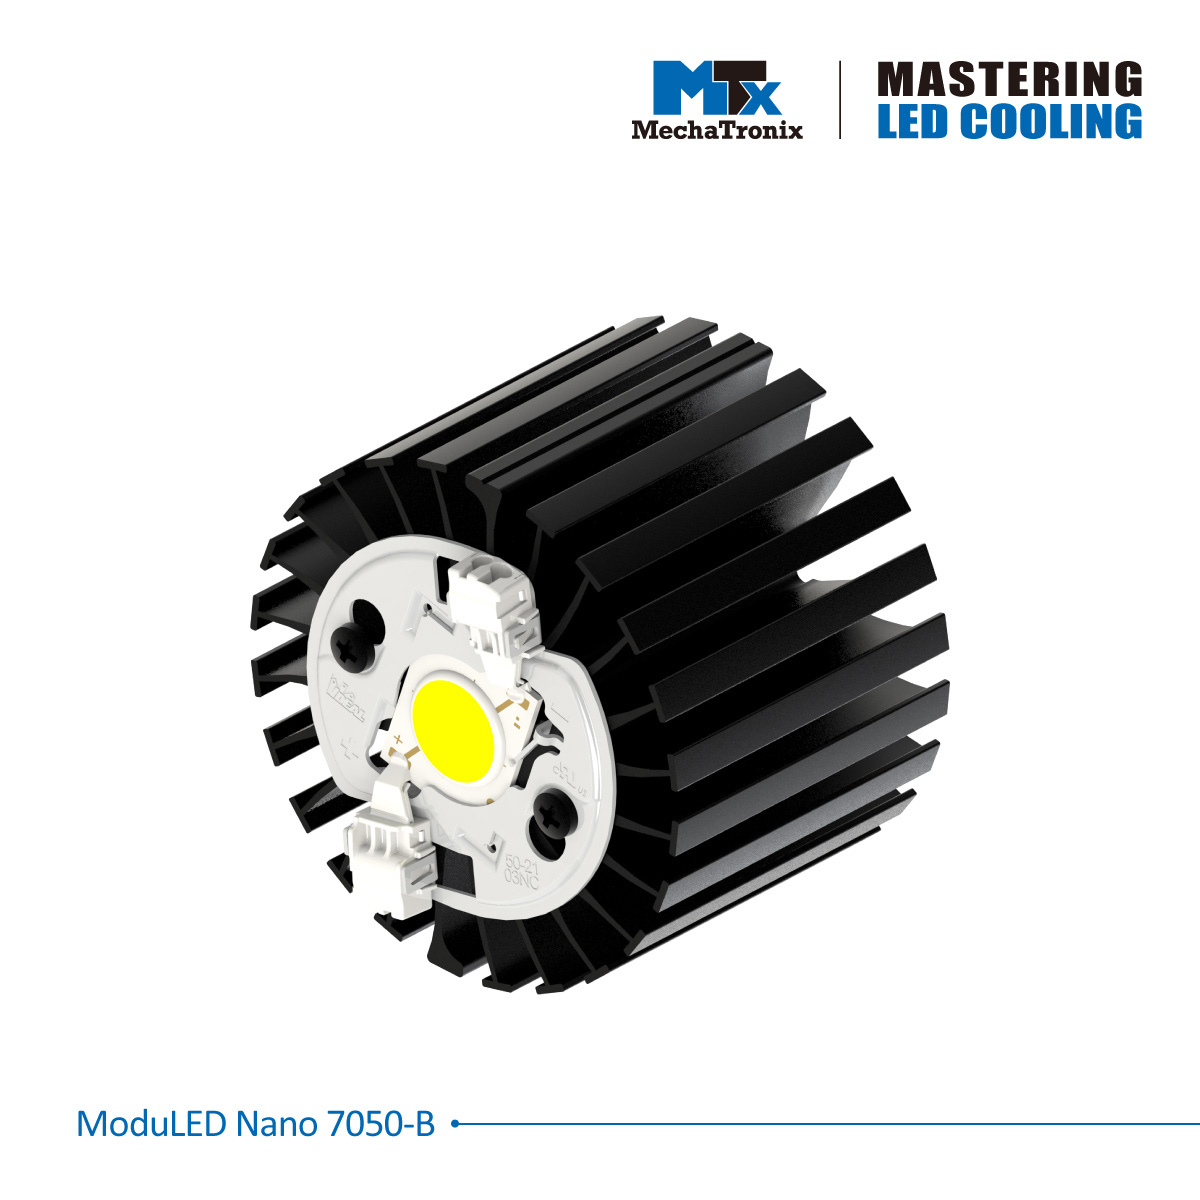 MechaTronix Heat Sink round 7cm MODULED NANO 7050-B for LED <4000lm